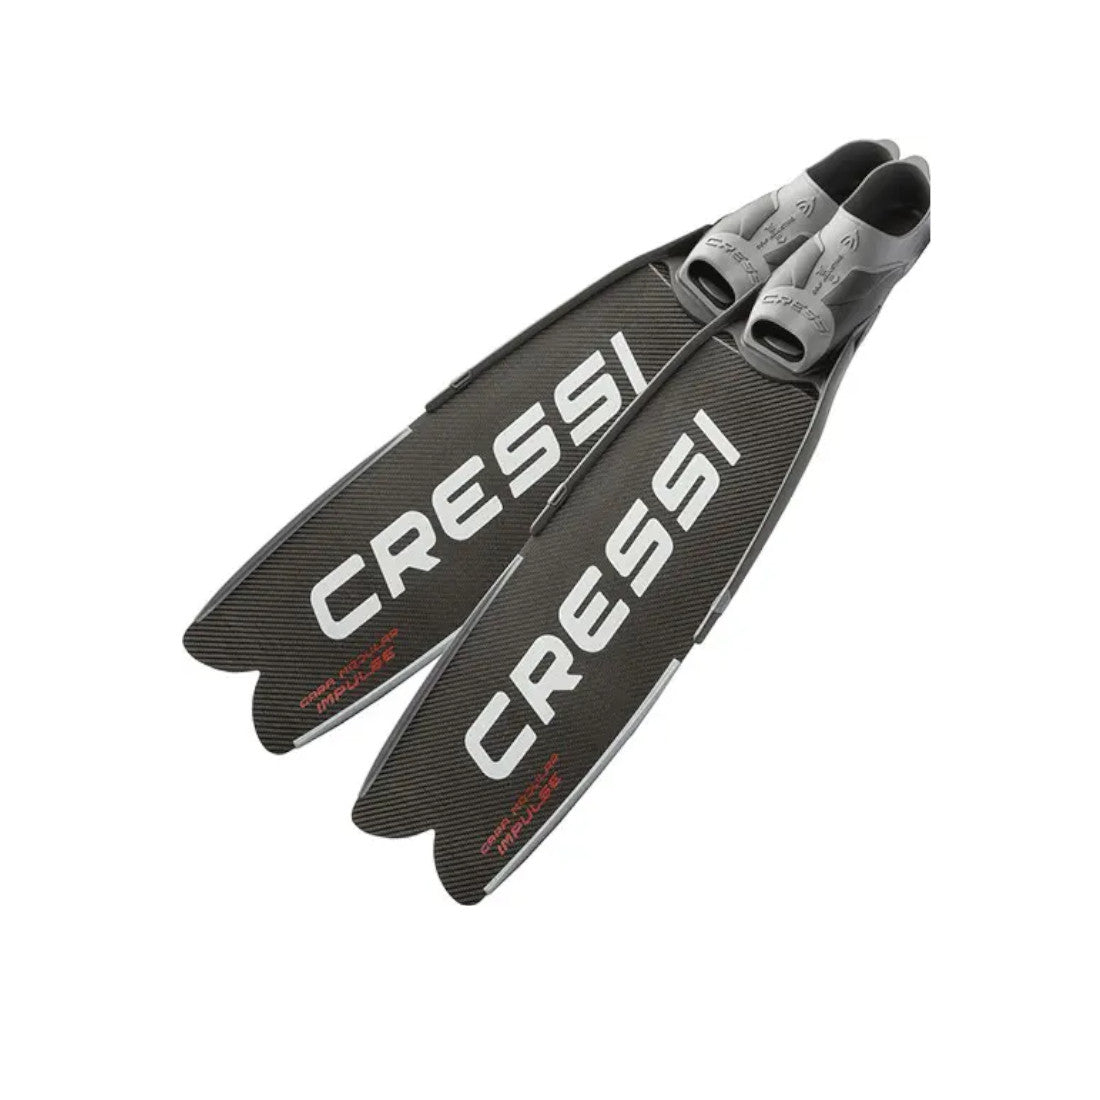 Cressi Gara Modular Impulse Spearfishing Fins Black